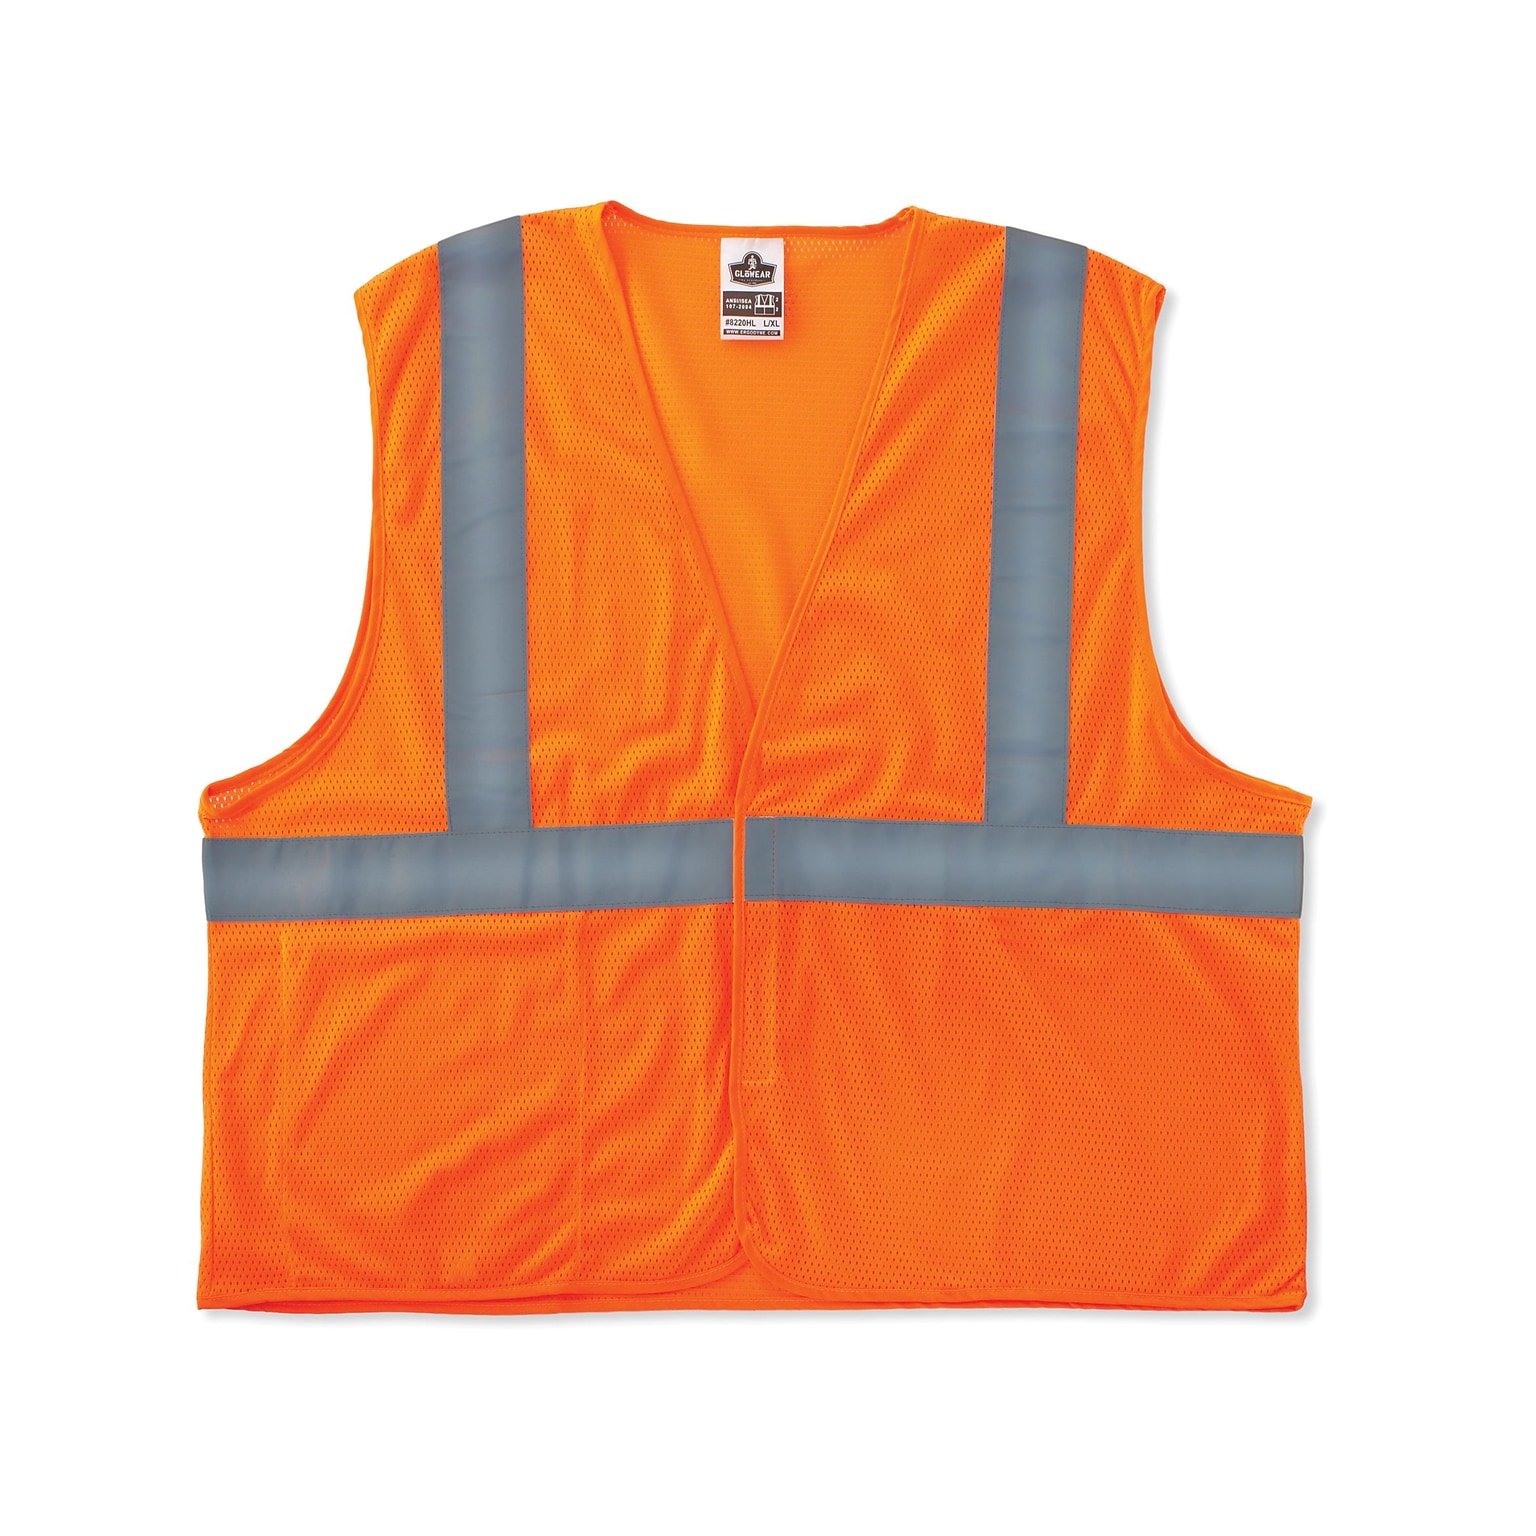 Ergodyne GloWear 8220HL High Visibility Sleeveless Safety Vest, ANSI Class R2, Orange, S/M (21133)